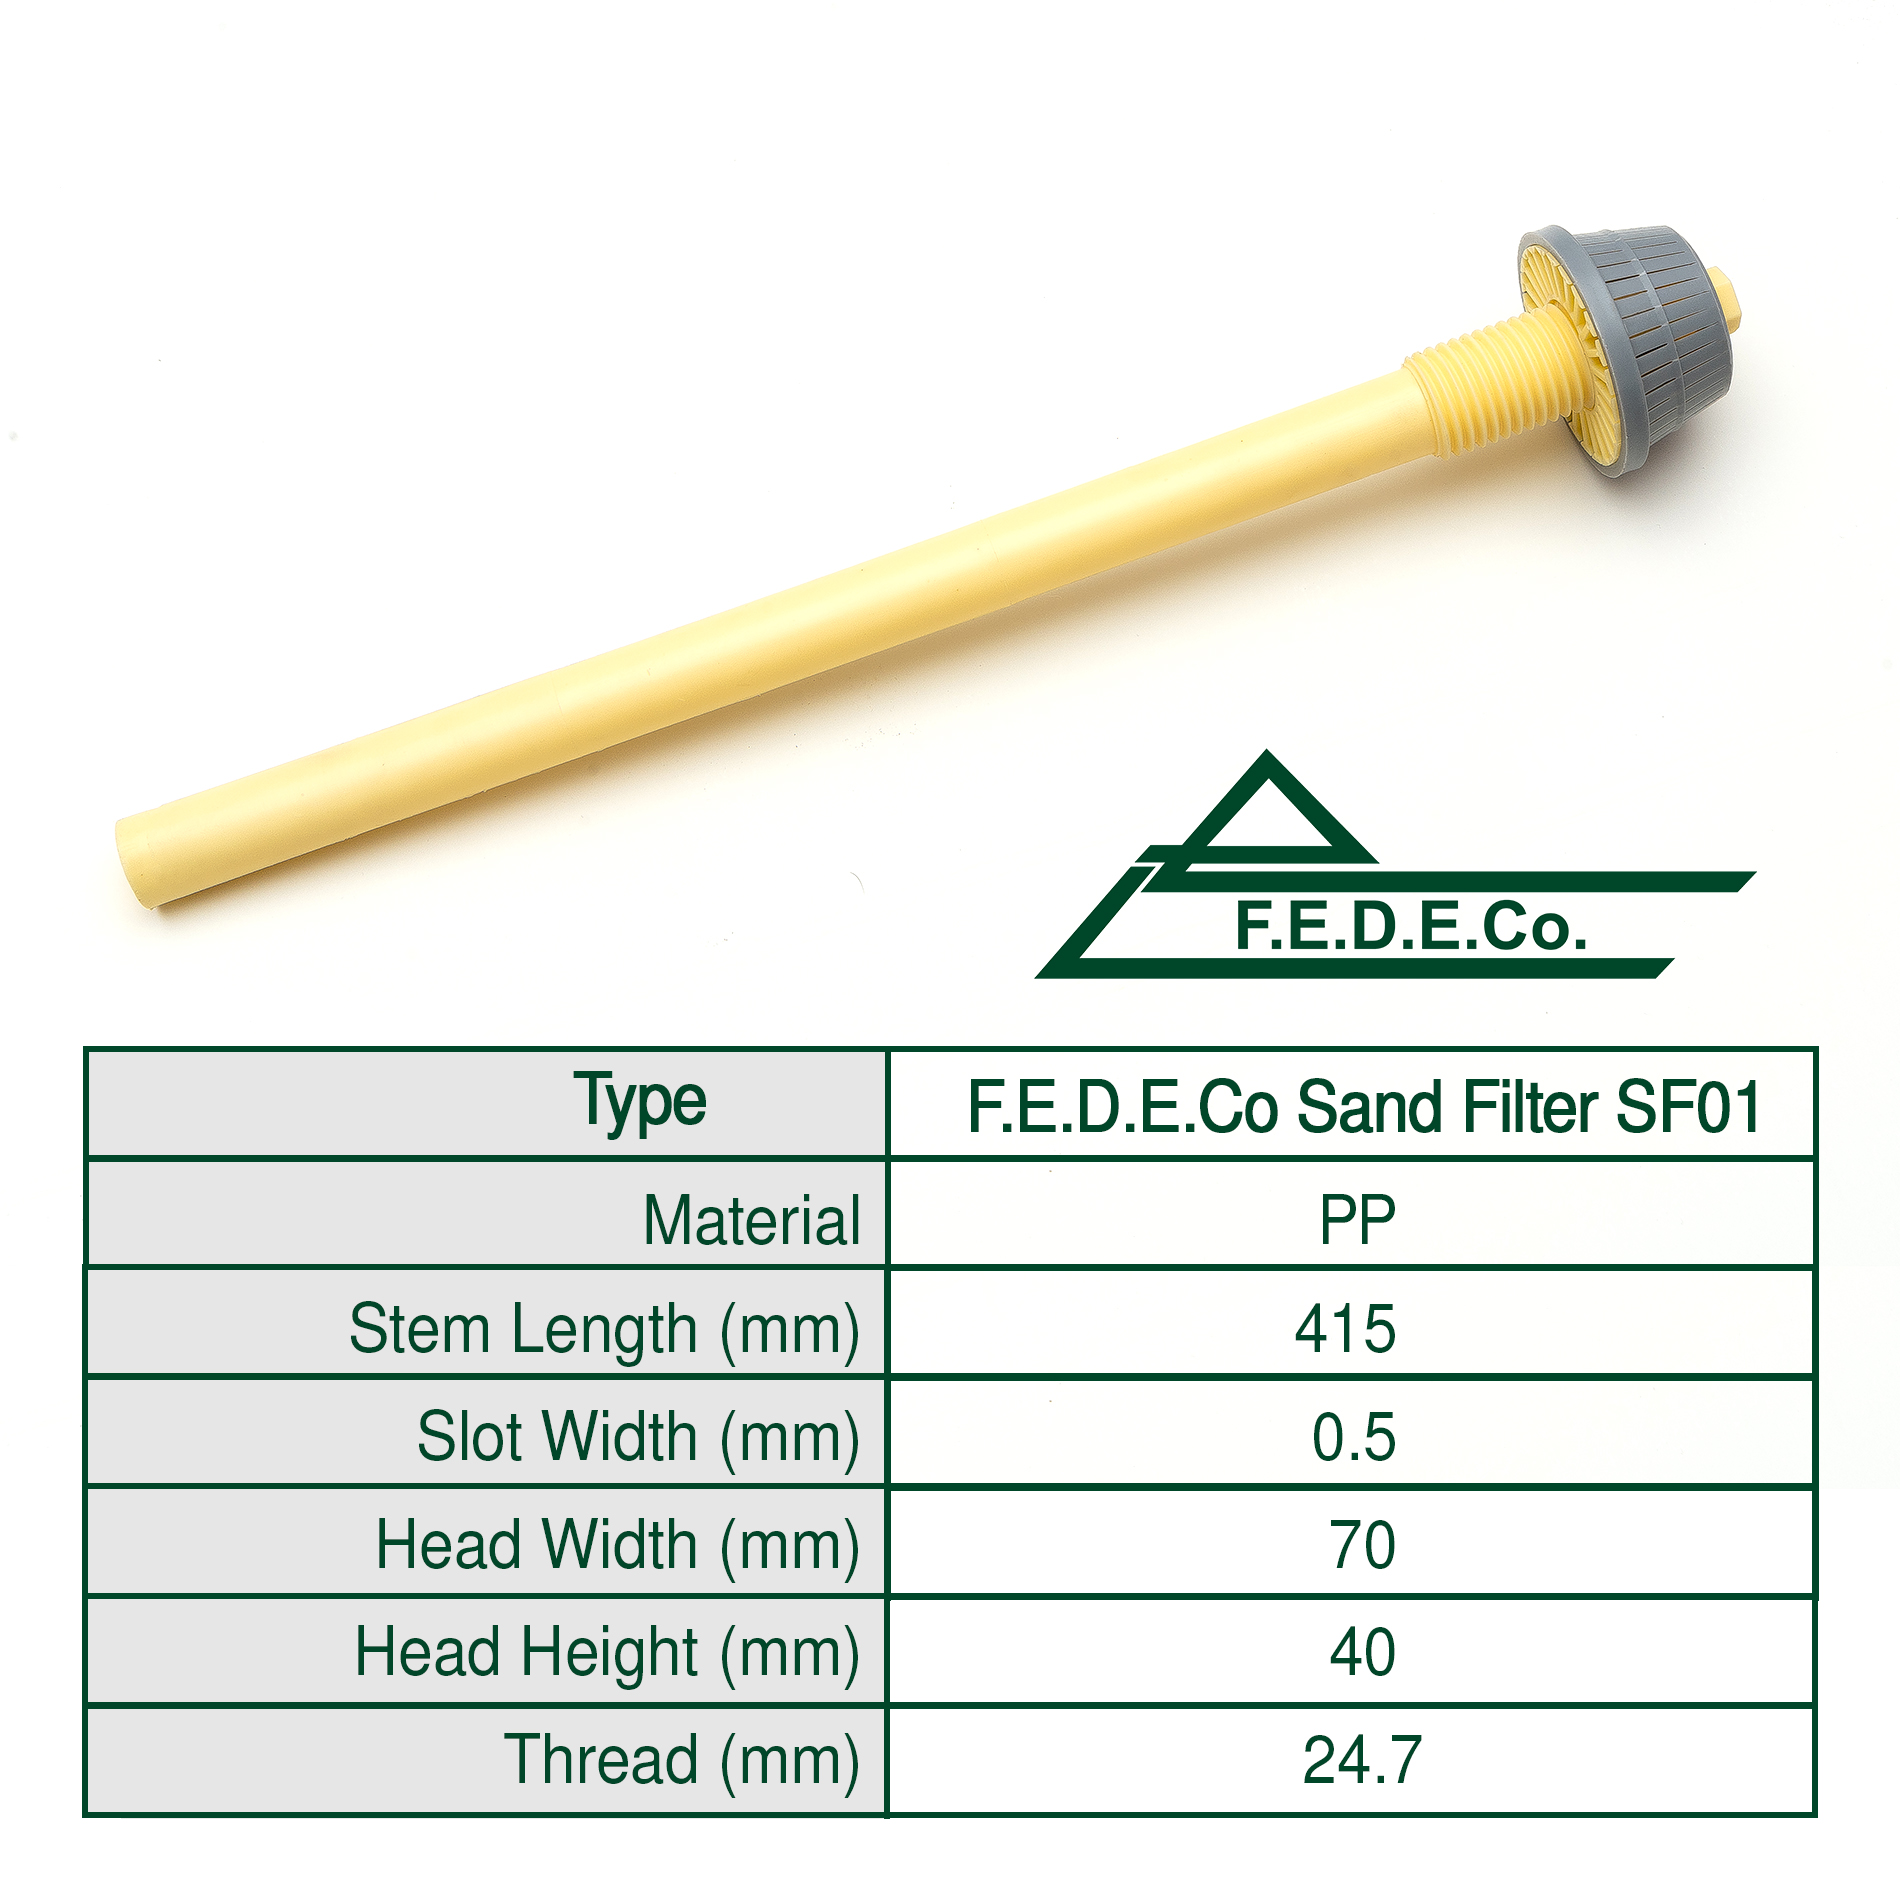 F.E.D.E.Co Sand Filter SF01